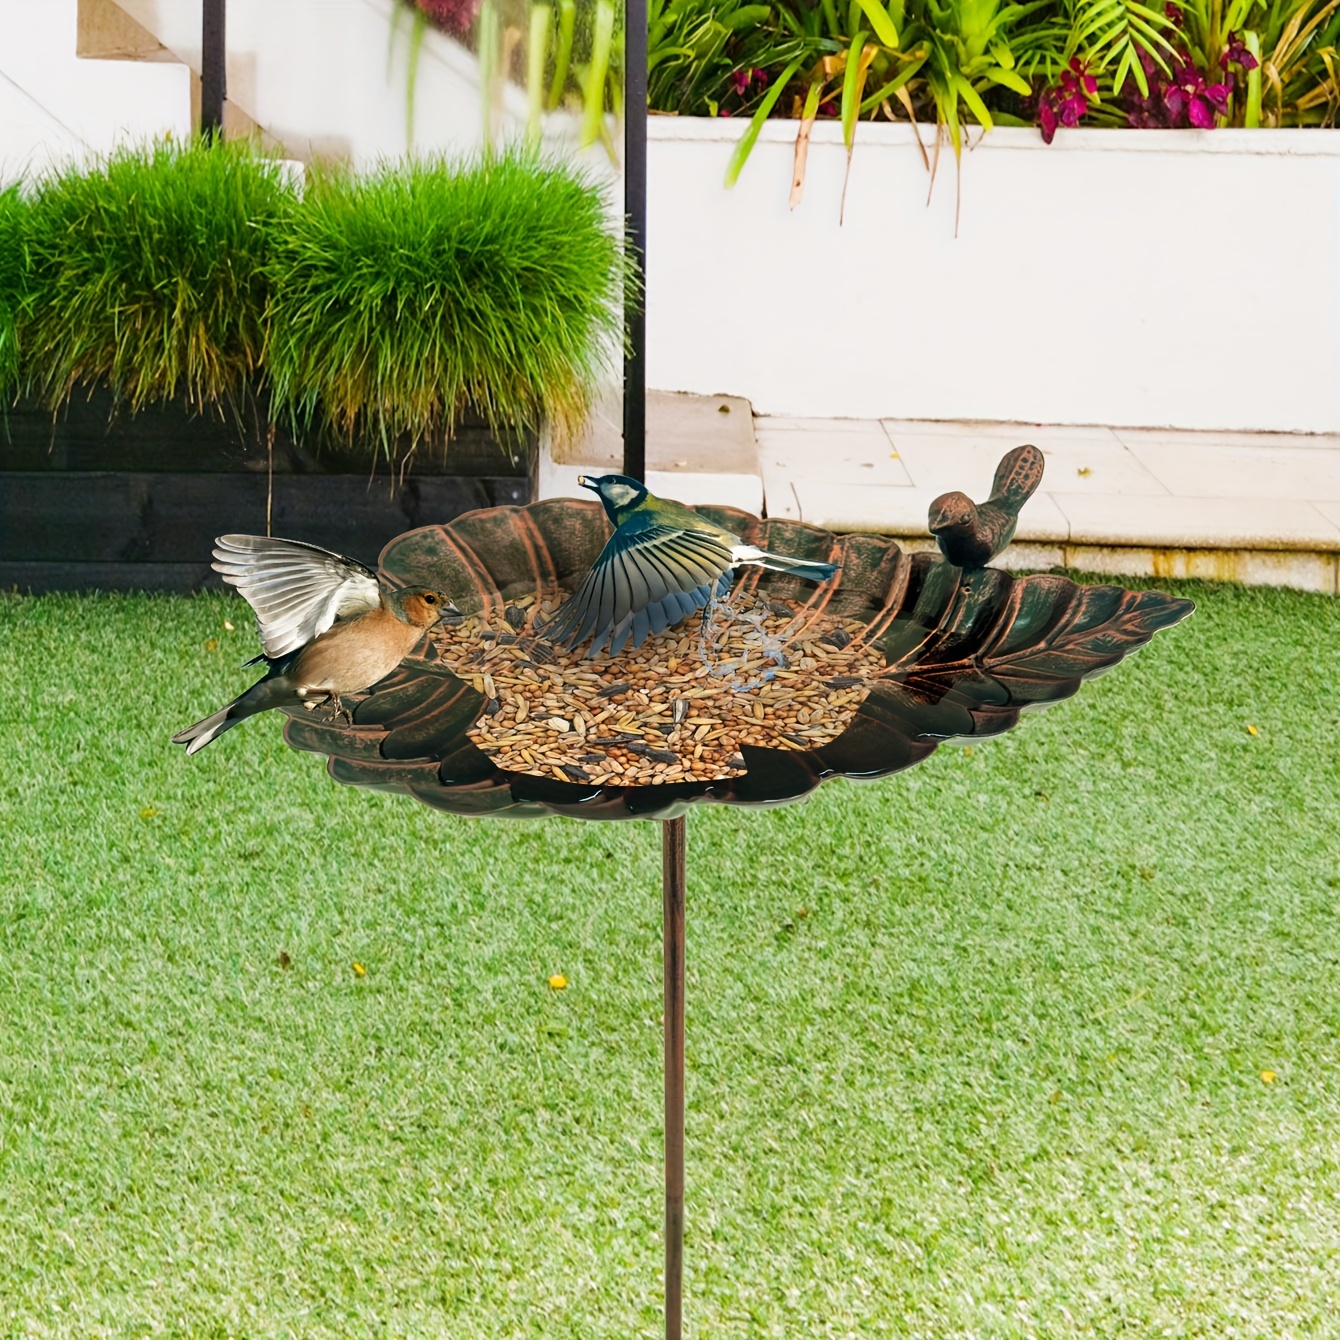 

1pc Metal Bird Bath Basin With Garden Stake, Lightweight Detachable Anti-rust Cast Iron Bird Figurine Decor, Suitable For Garden, Yard Lawn Patio, Gift For Bird Lovers, Outdoor Bird Feeder Decor